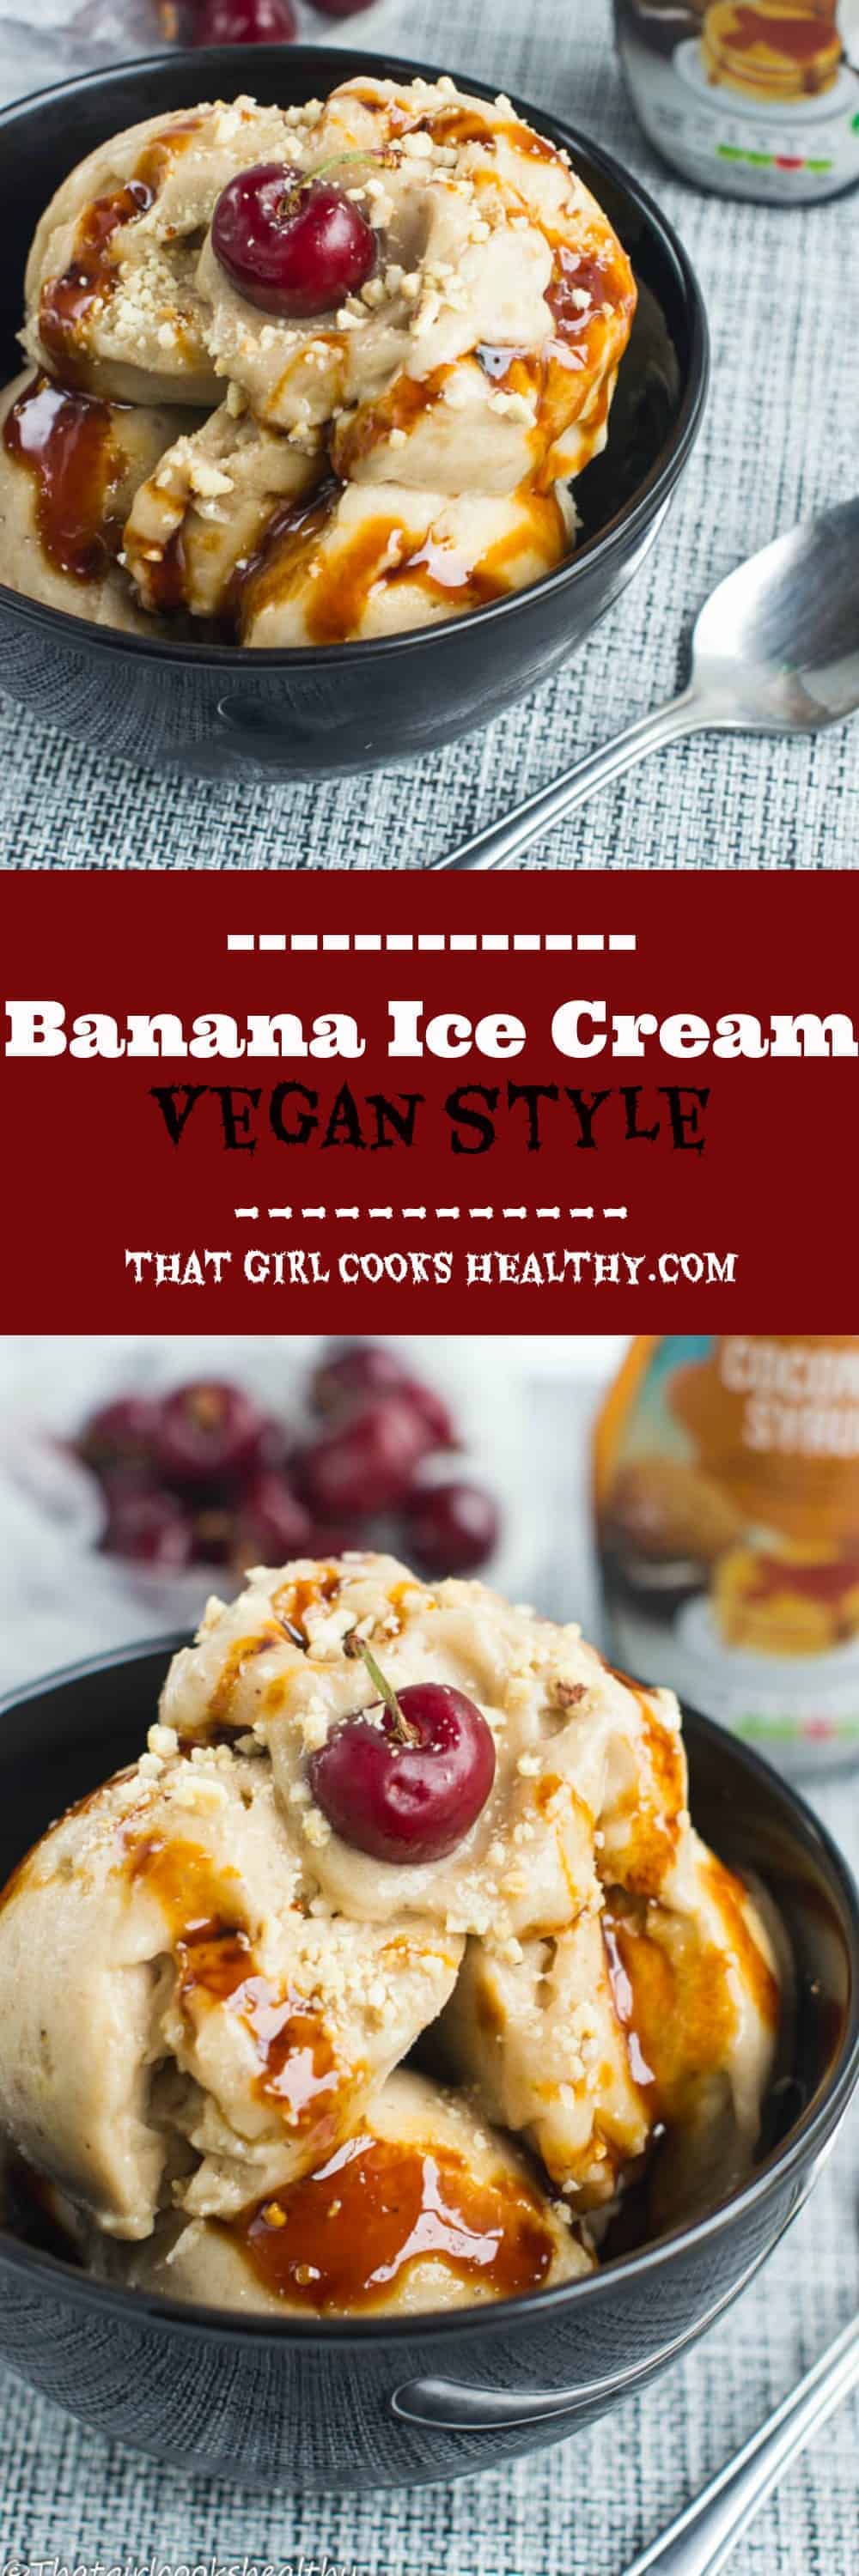 https://thatgirlcookshealthy.com/wp-content/uploads/2015/06/banana-ice-cream.jpg